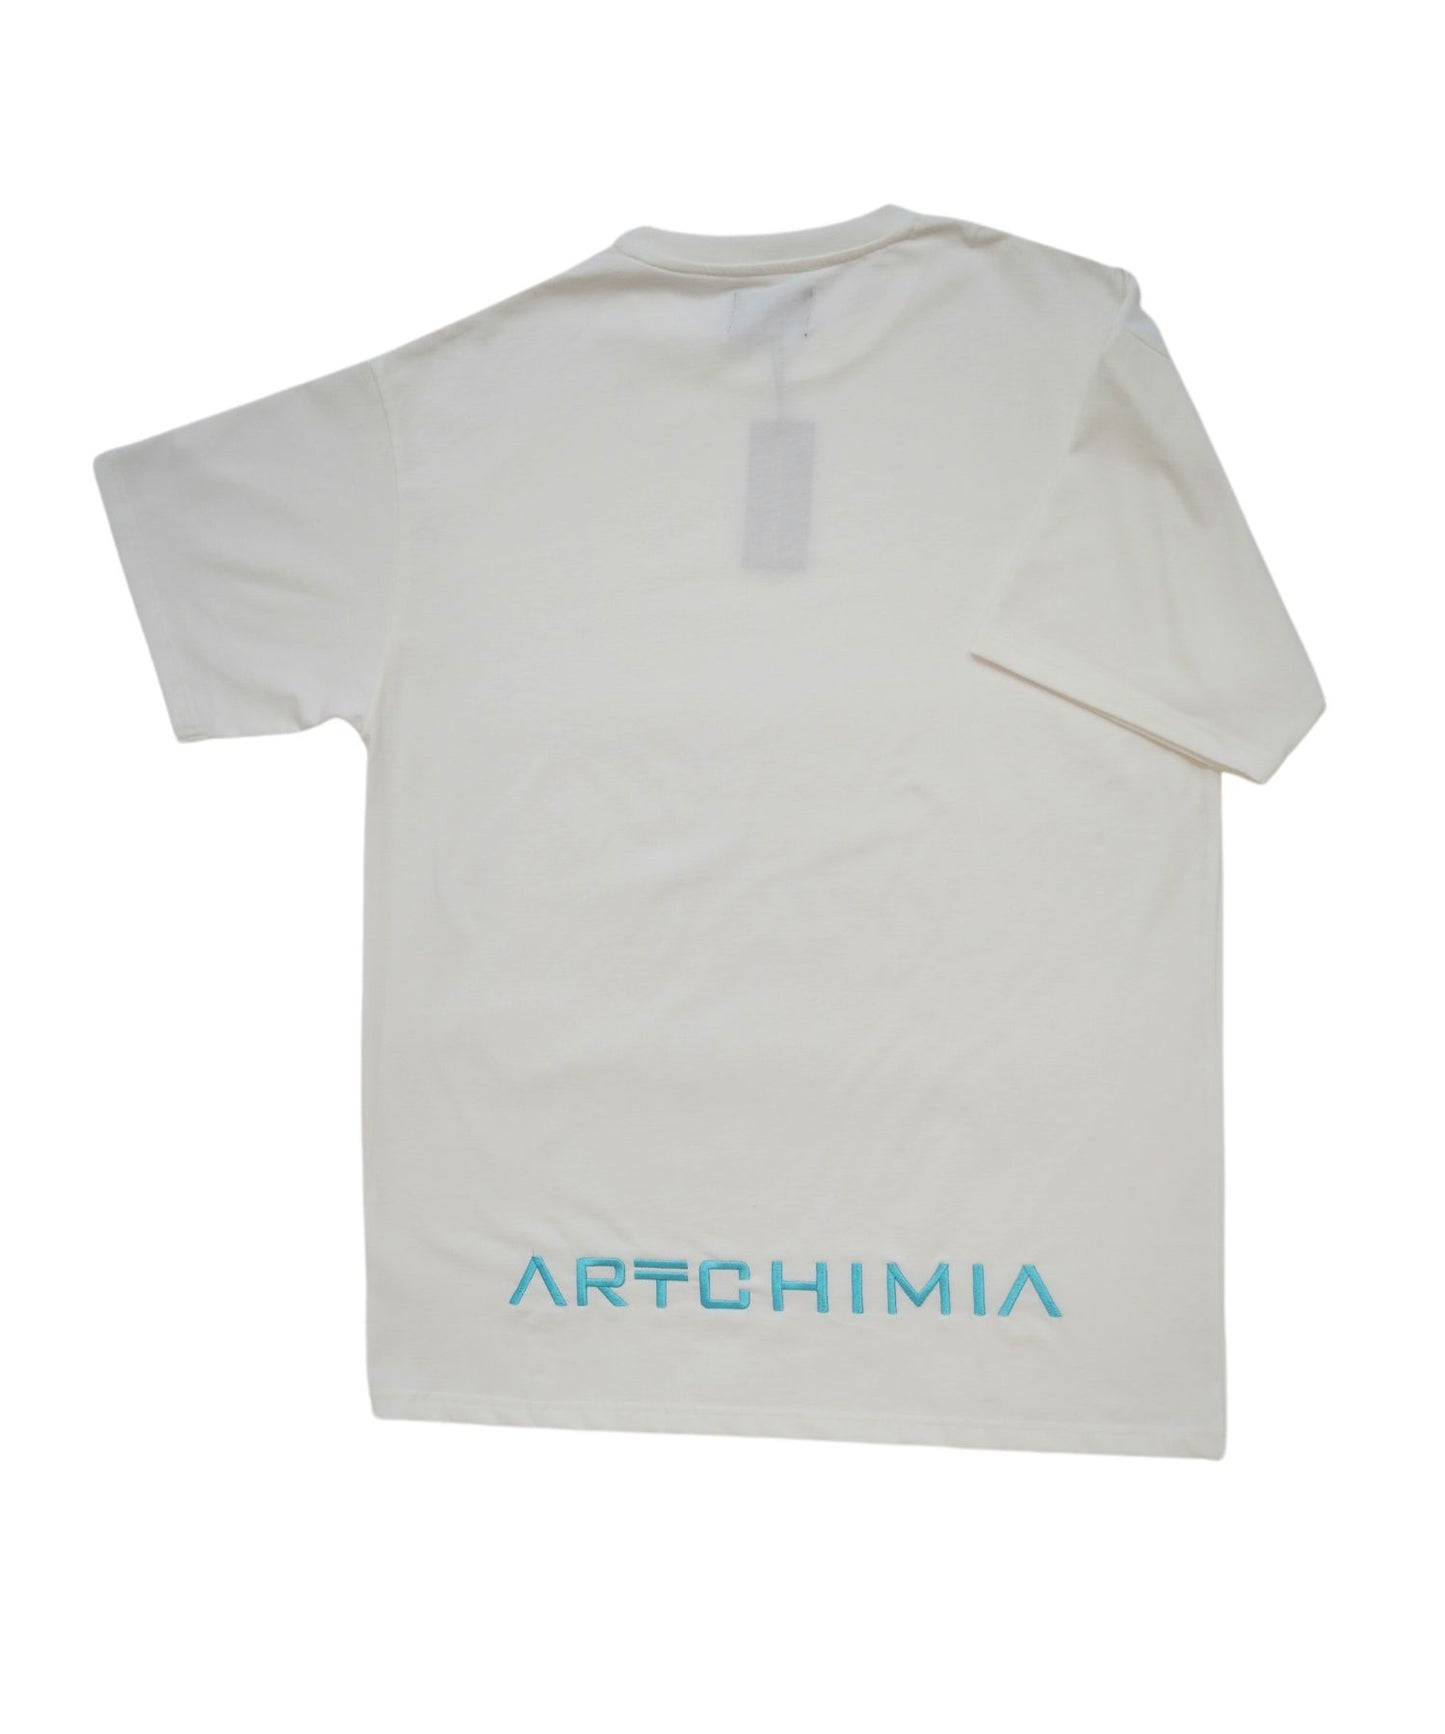 Artchimia basic Logo tee